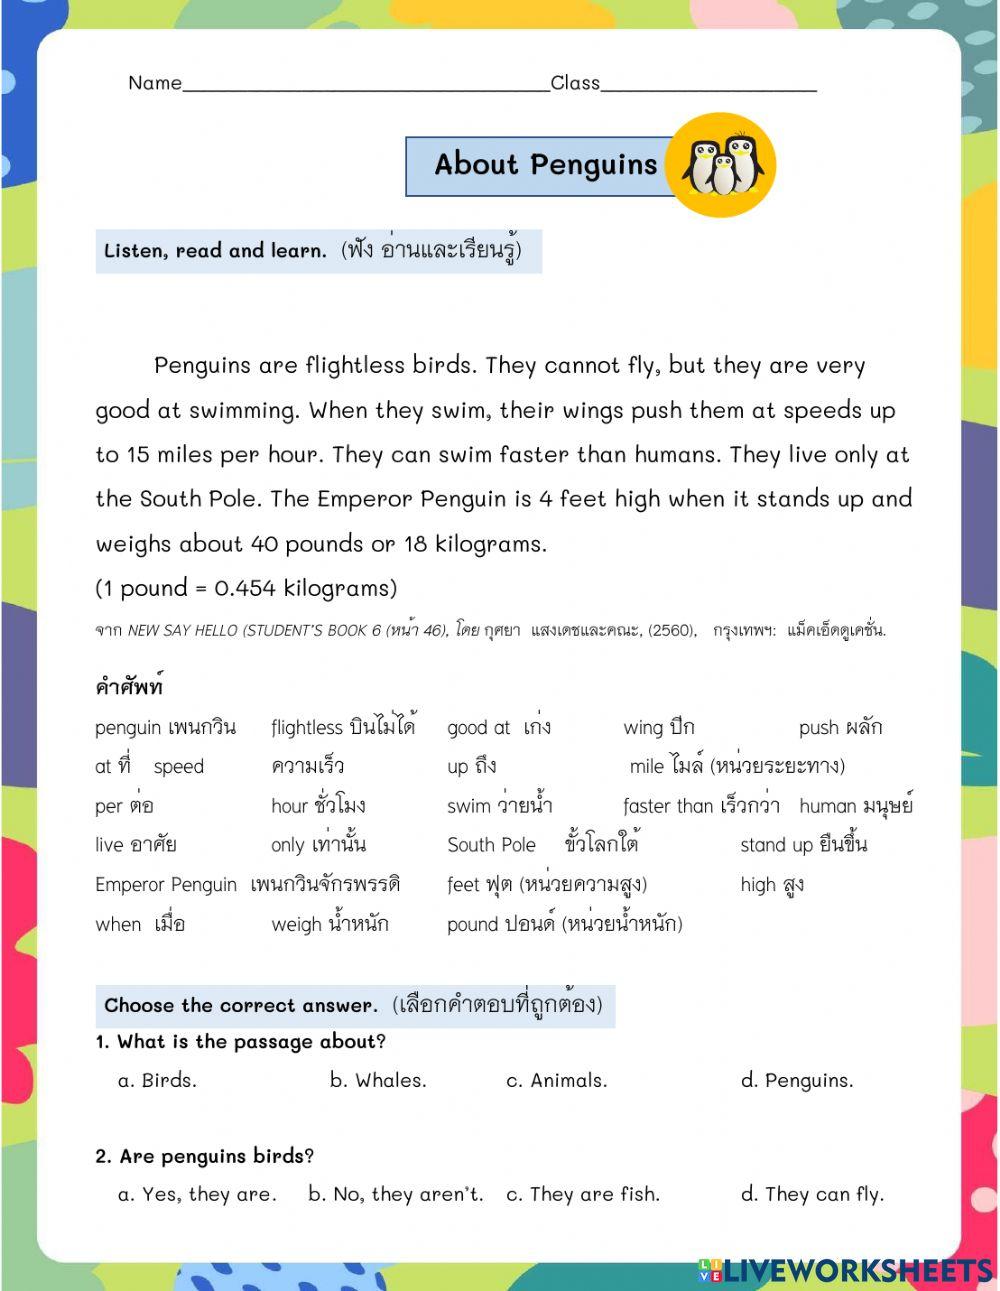 About Penguins